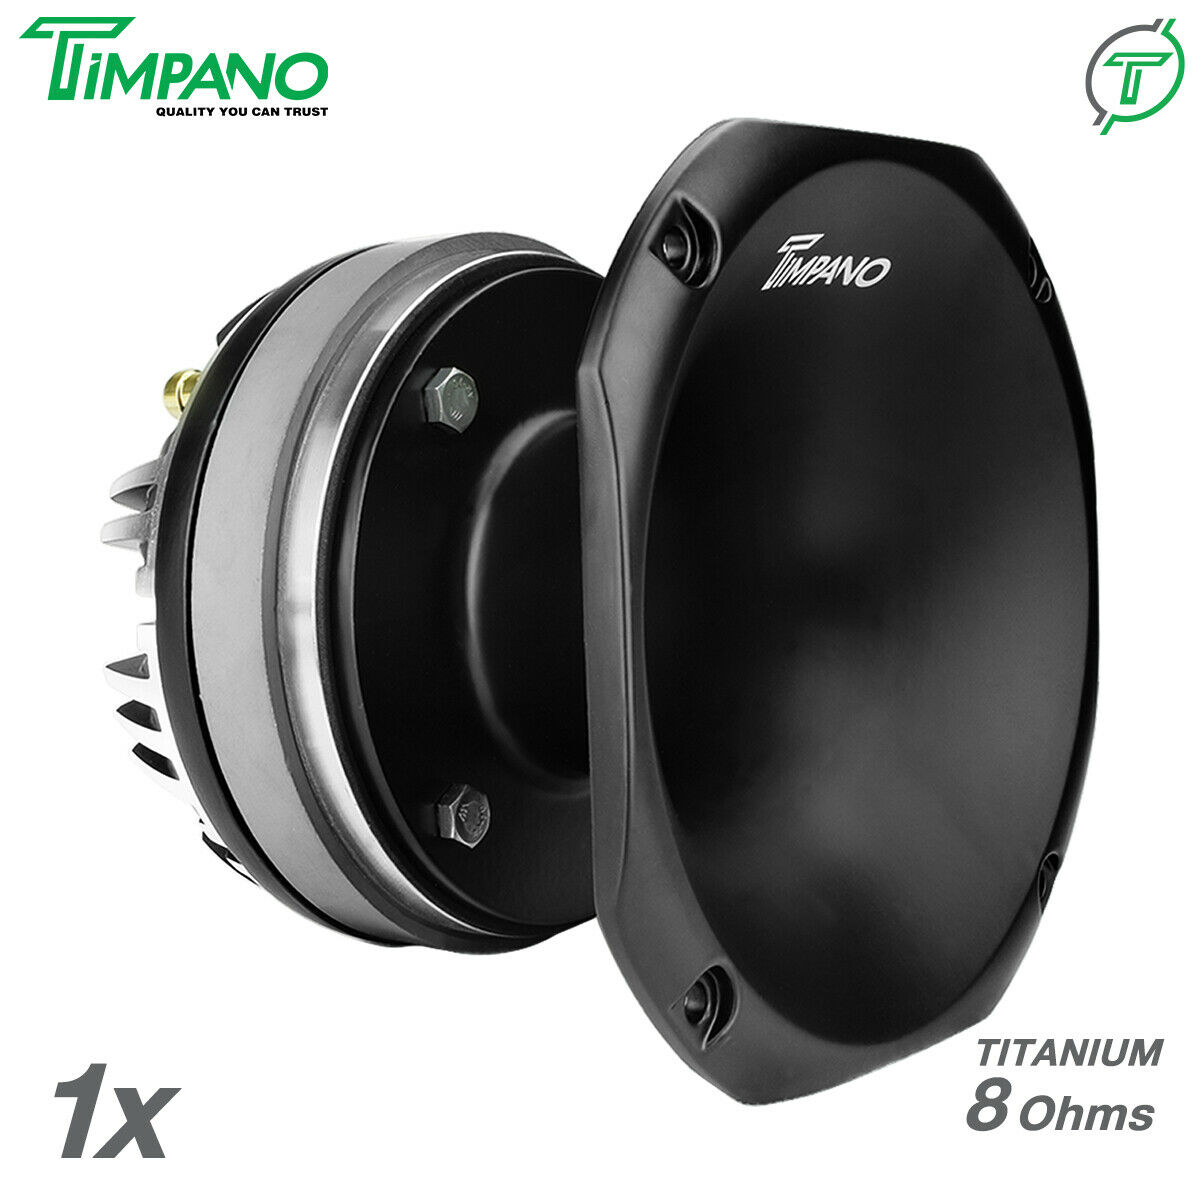 1x Timpano Tpt-dh2000 Slim 2" Compression Driver + Horn - Titanium 8 Ohms 200w